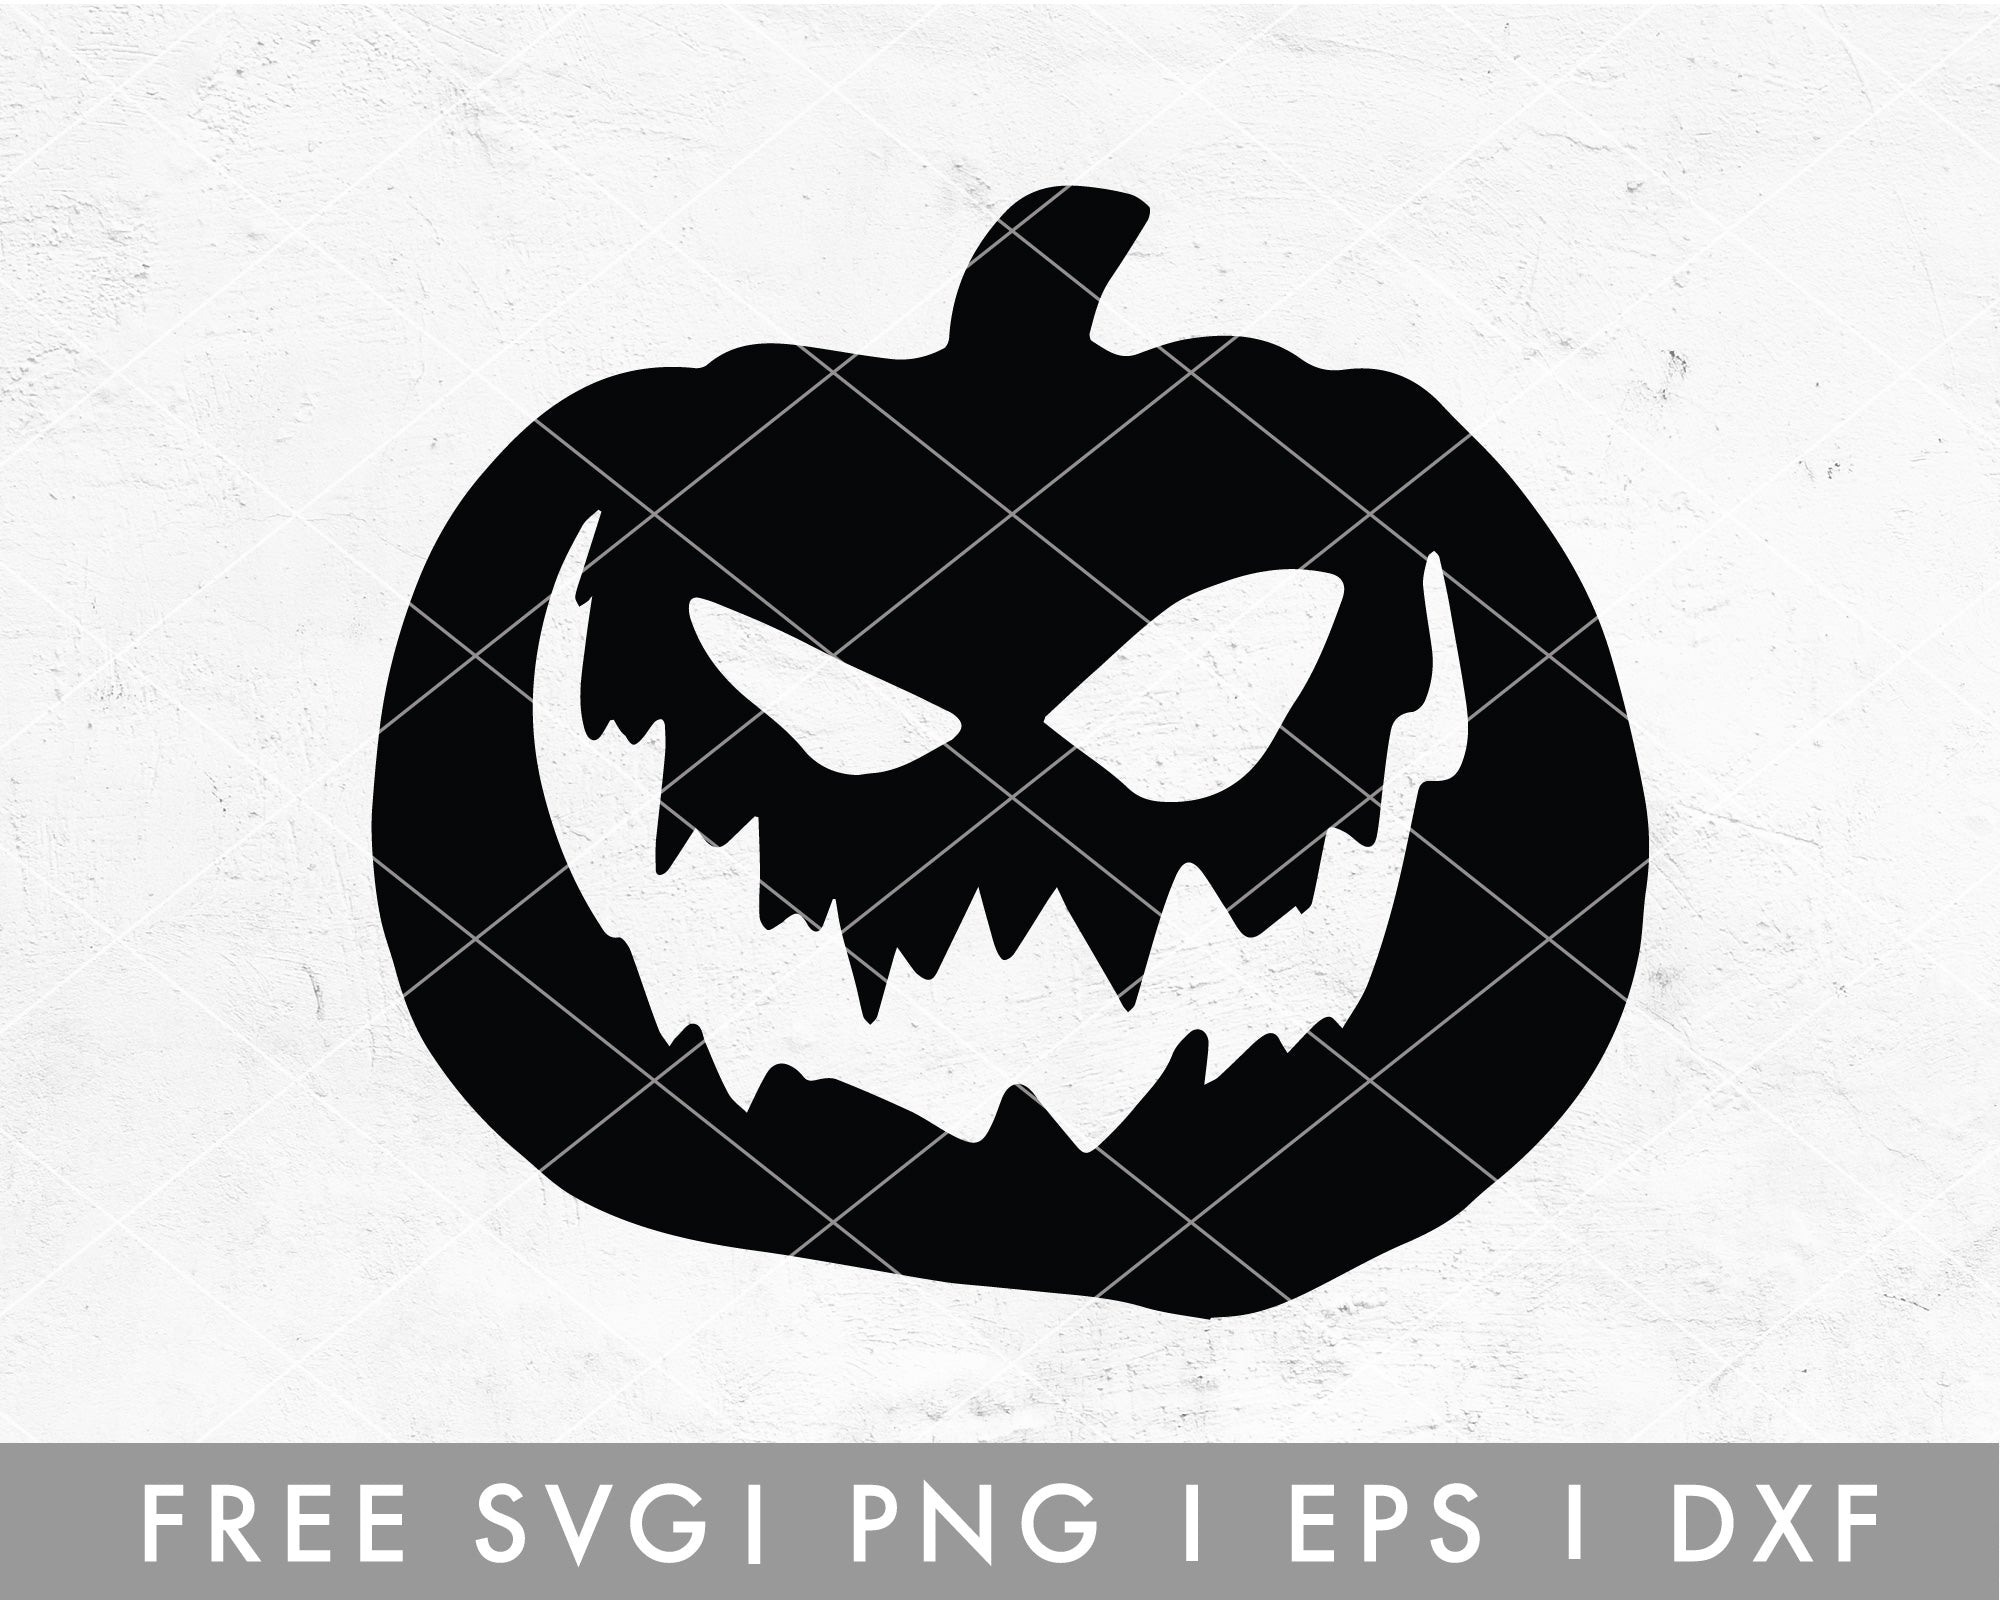 Halloween Purple Pumpkin SVG - SVGbees